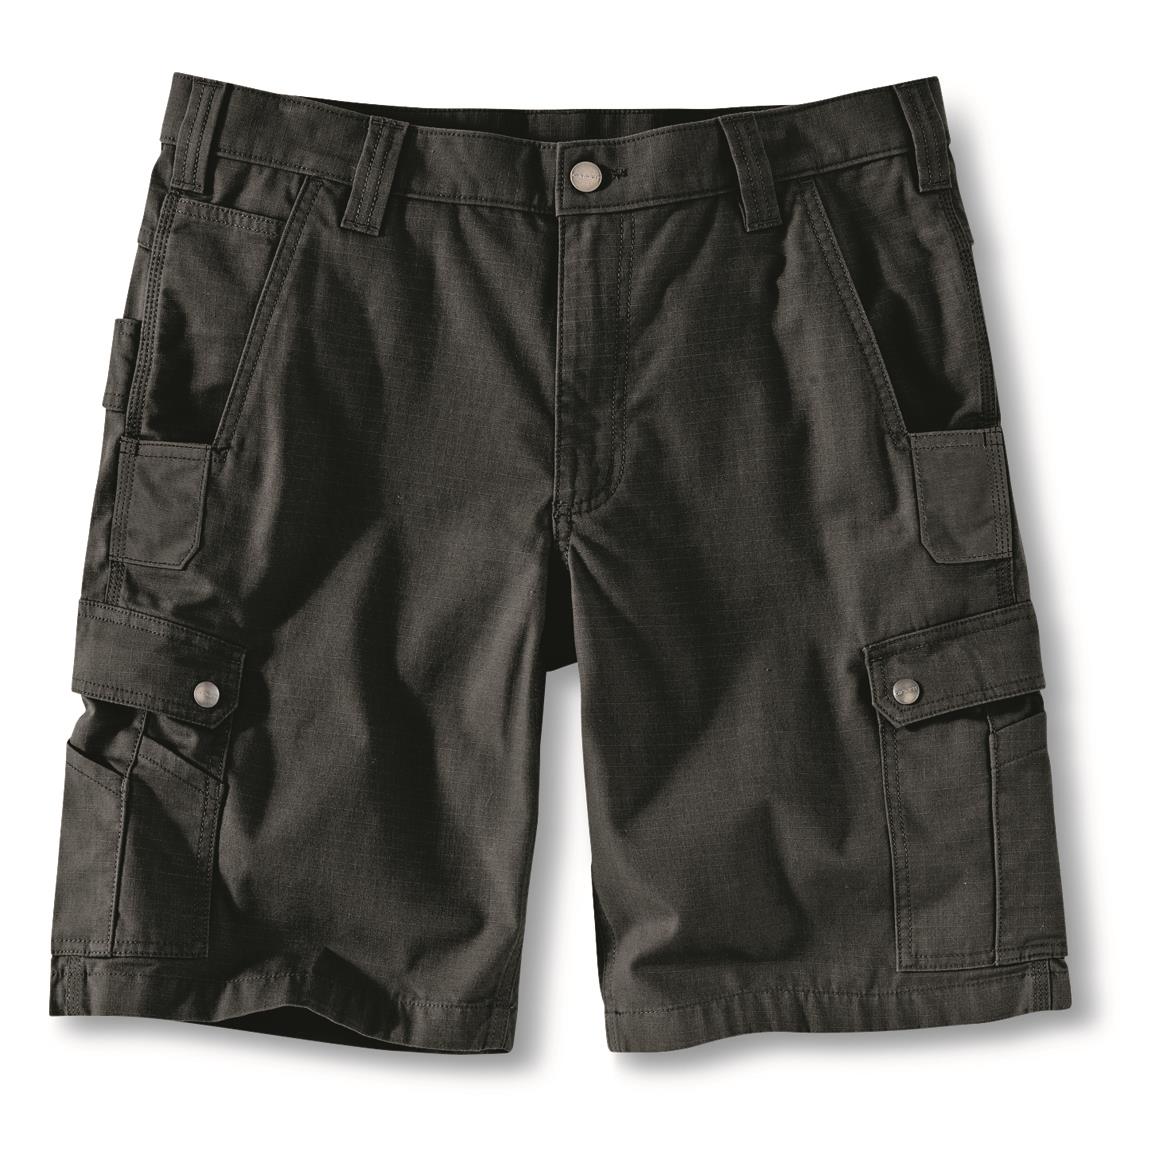 Carhartt Men's Ripstop Cargo Work Shorts, Black